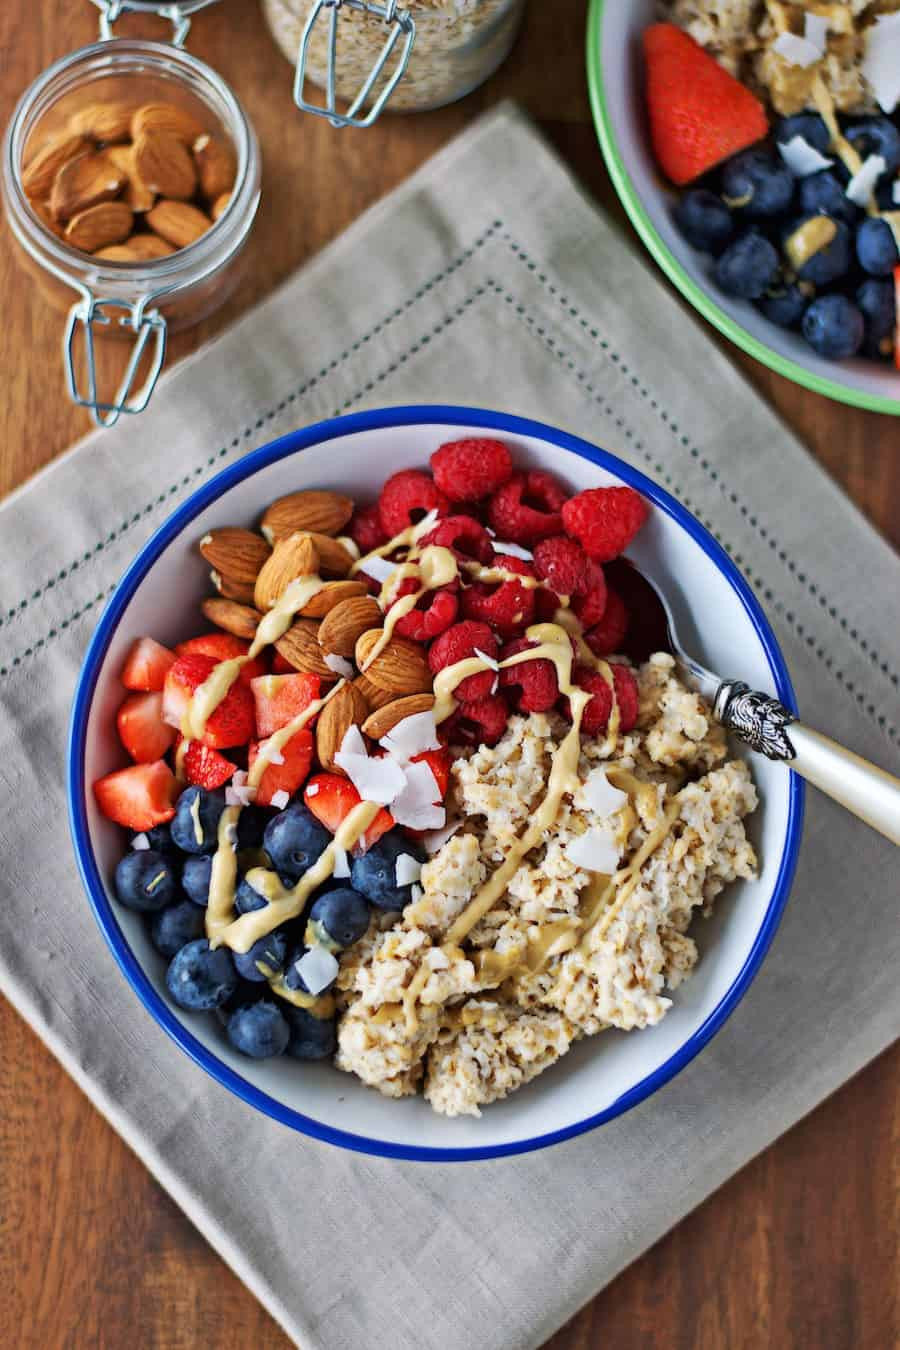 Healthy Vegan Breakfast Recipes
 25 Brilliant Vegan Breakfast Recipes To Brighten Up Your